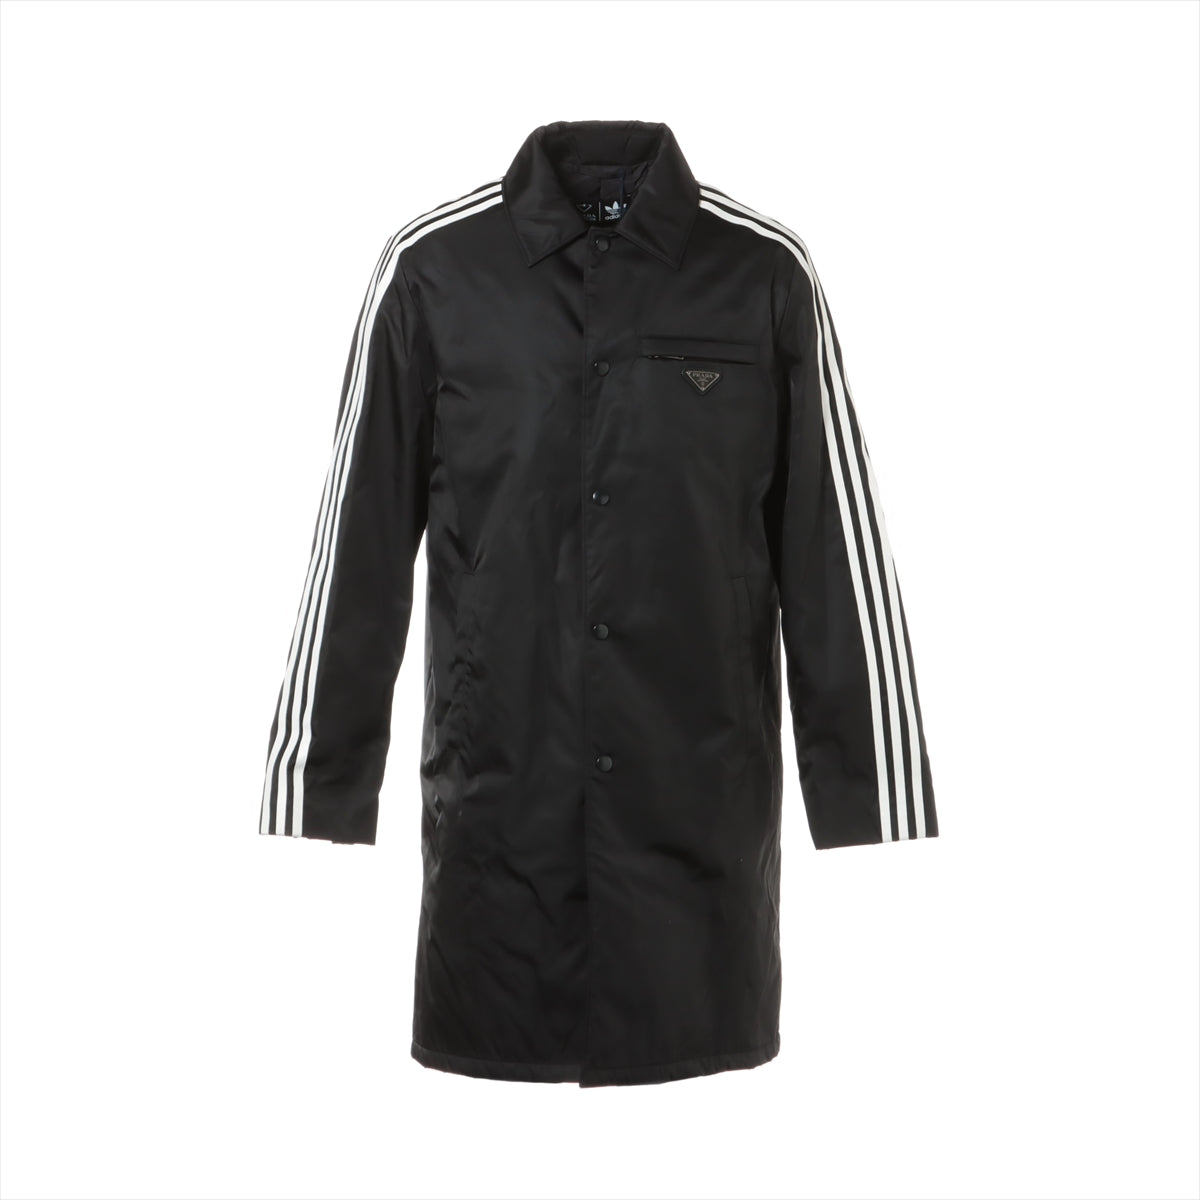 Prada x Adidas Re Nylon Re Nylon 21 years Nylon coats 46 Men's Black  car coat with garment tag